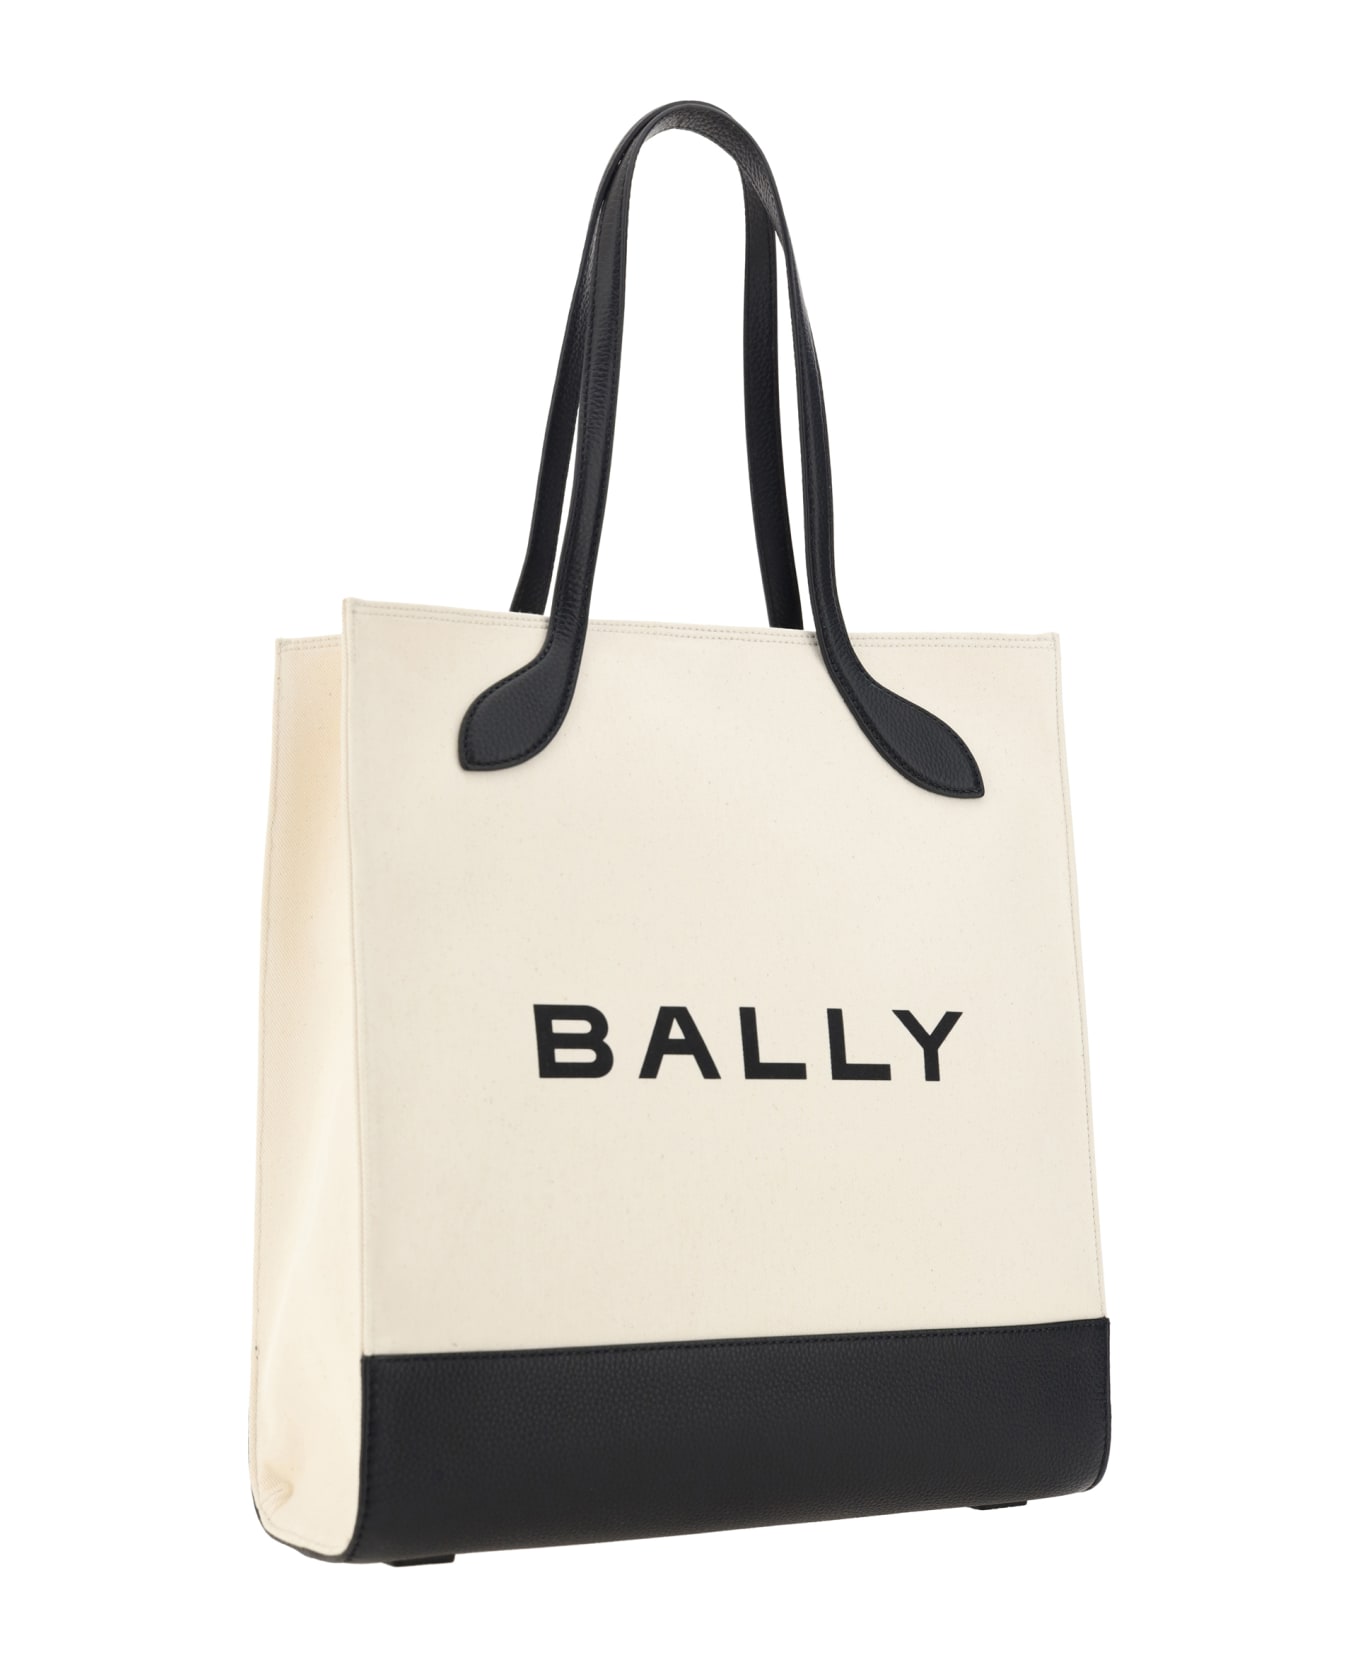 Bally Tote Shoulder Bag - NEUTRALS/BLACK